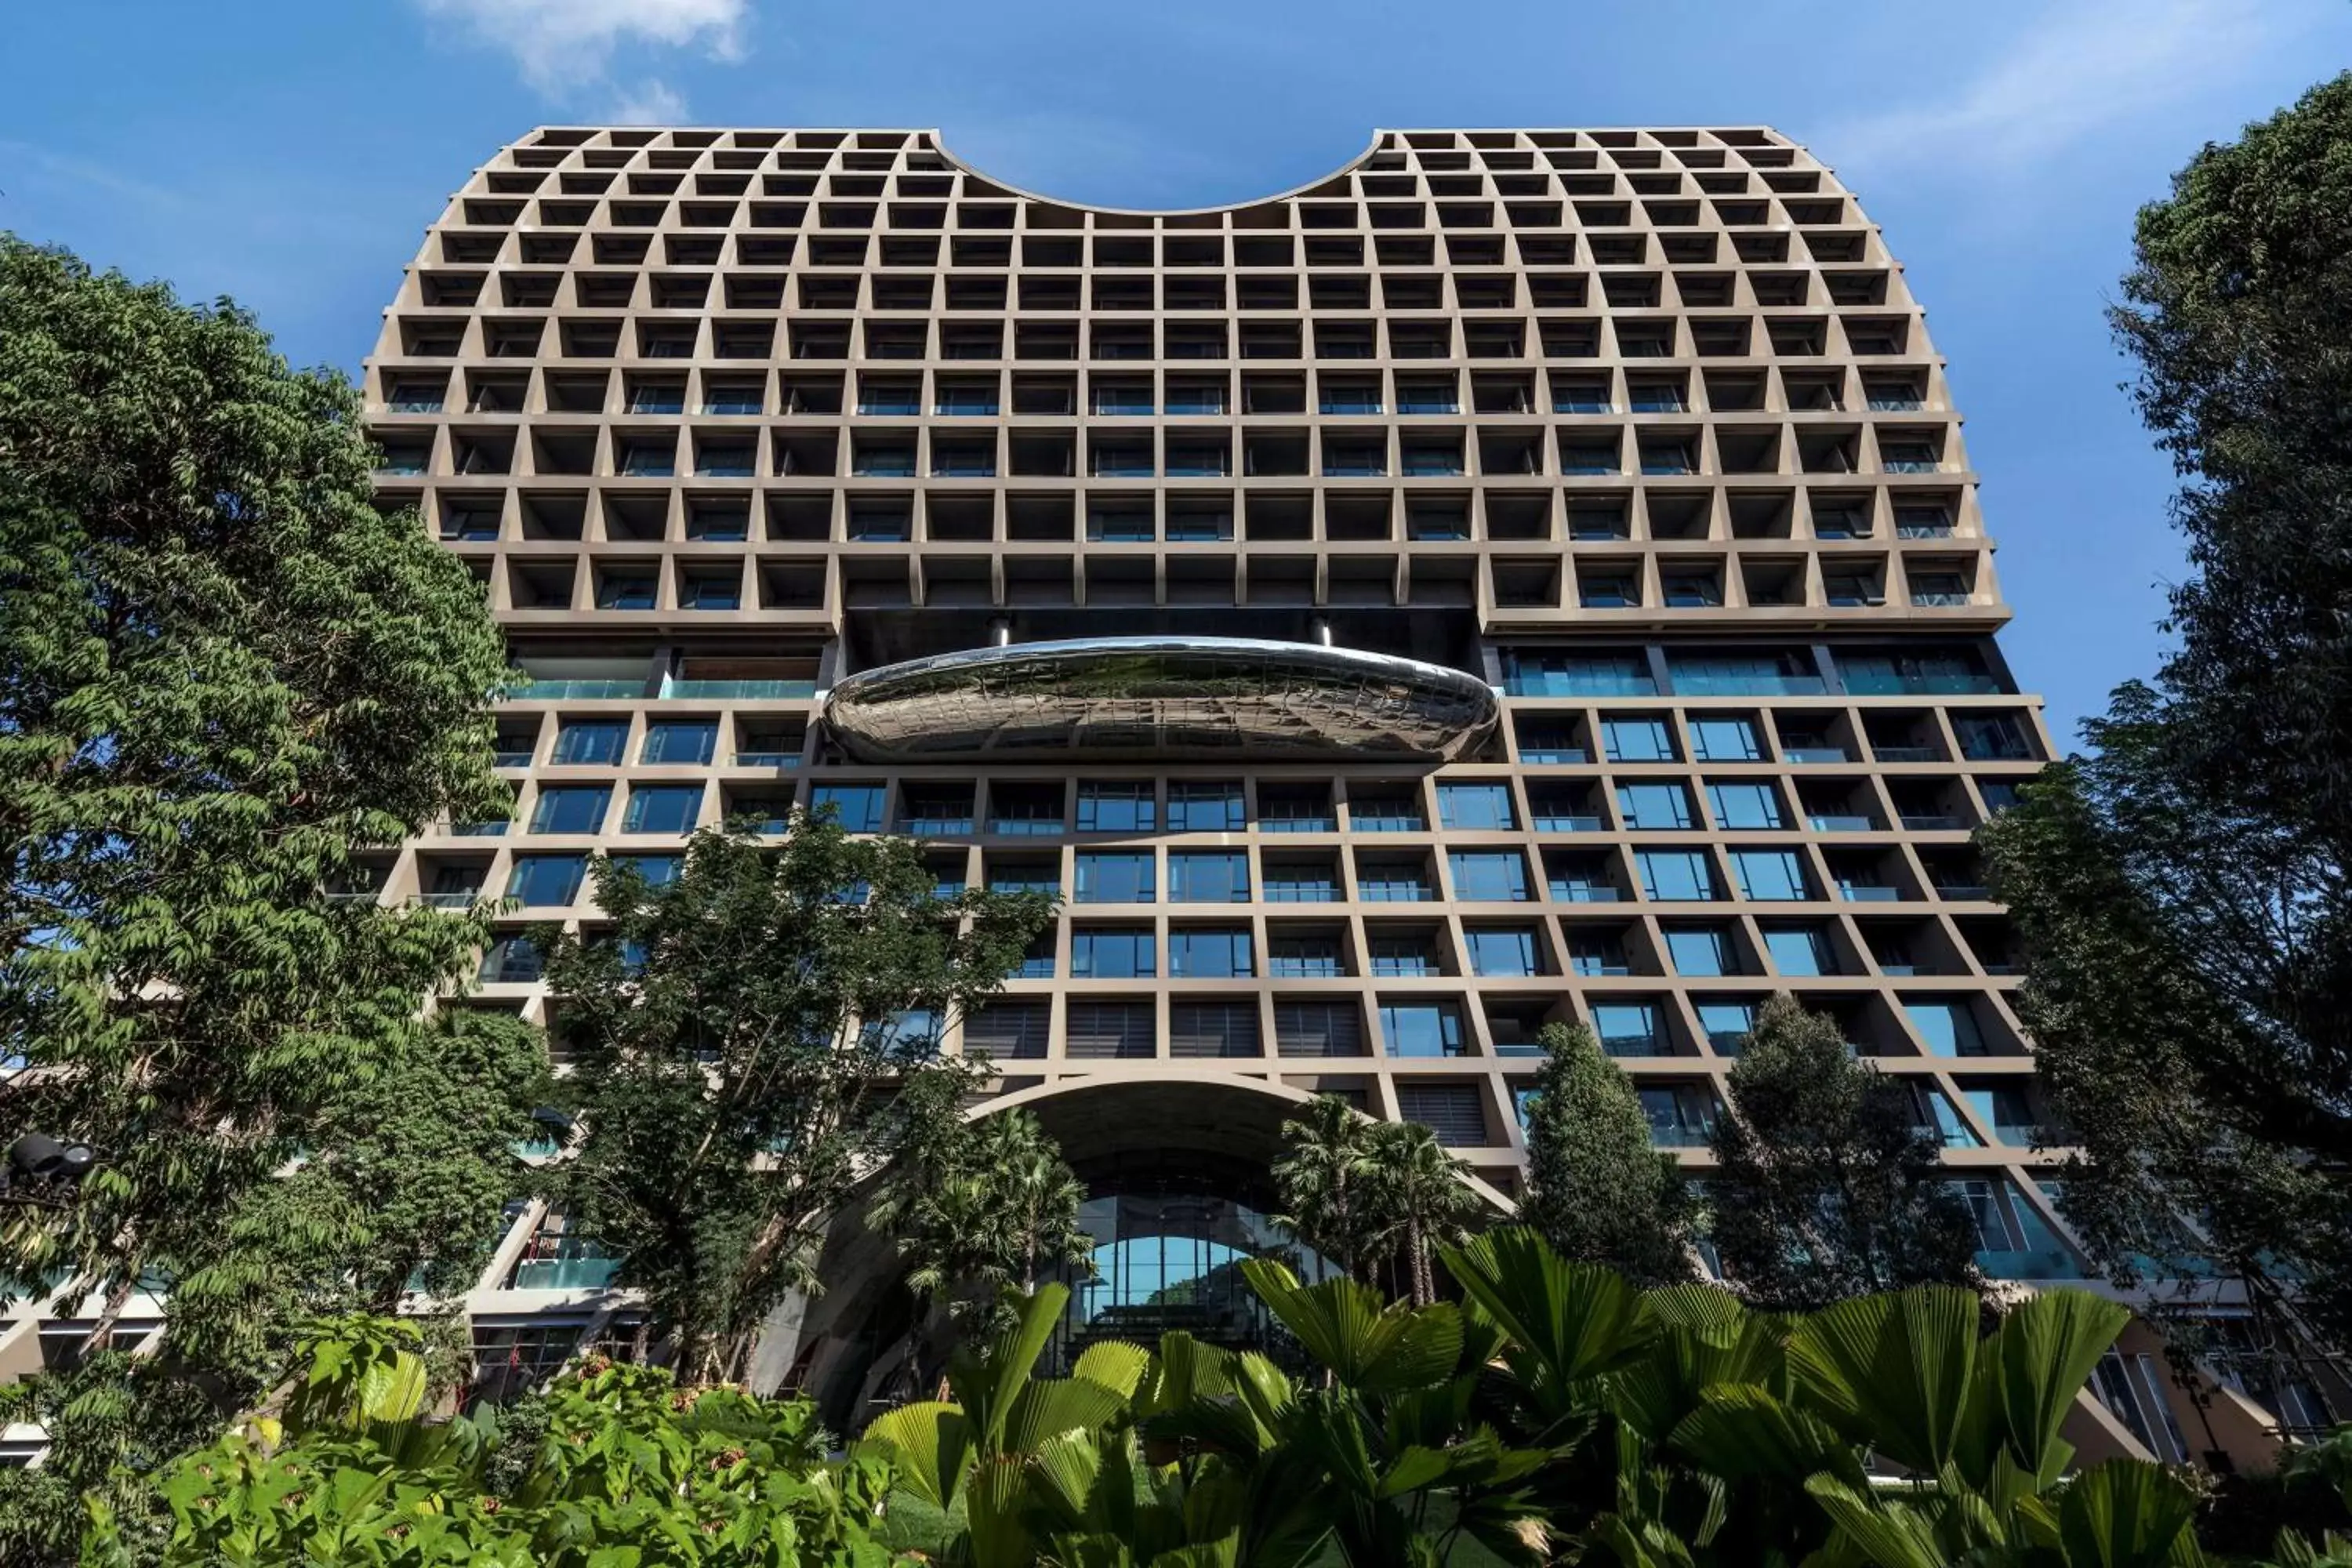 Property Building in Sindhorn Kempinski Hotel Bangkok - SHA Extra Plus Certified